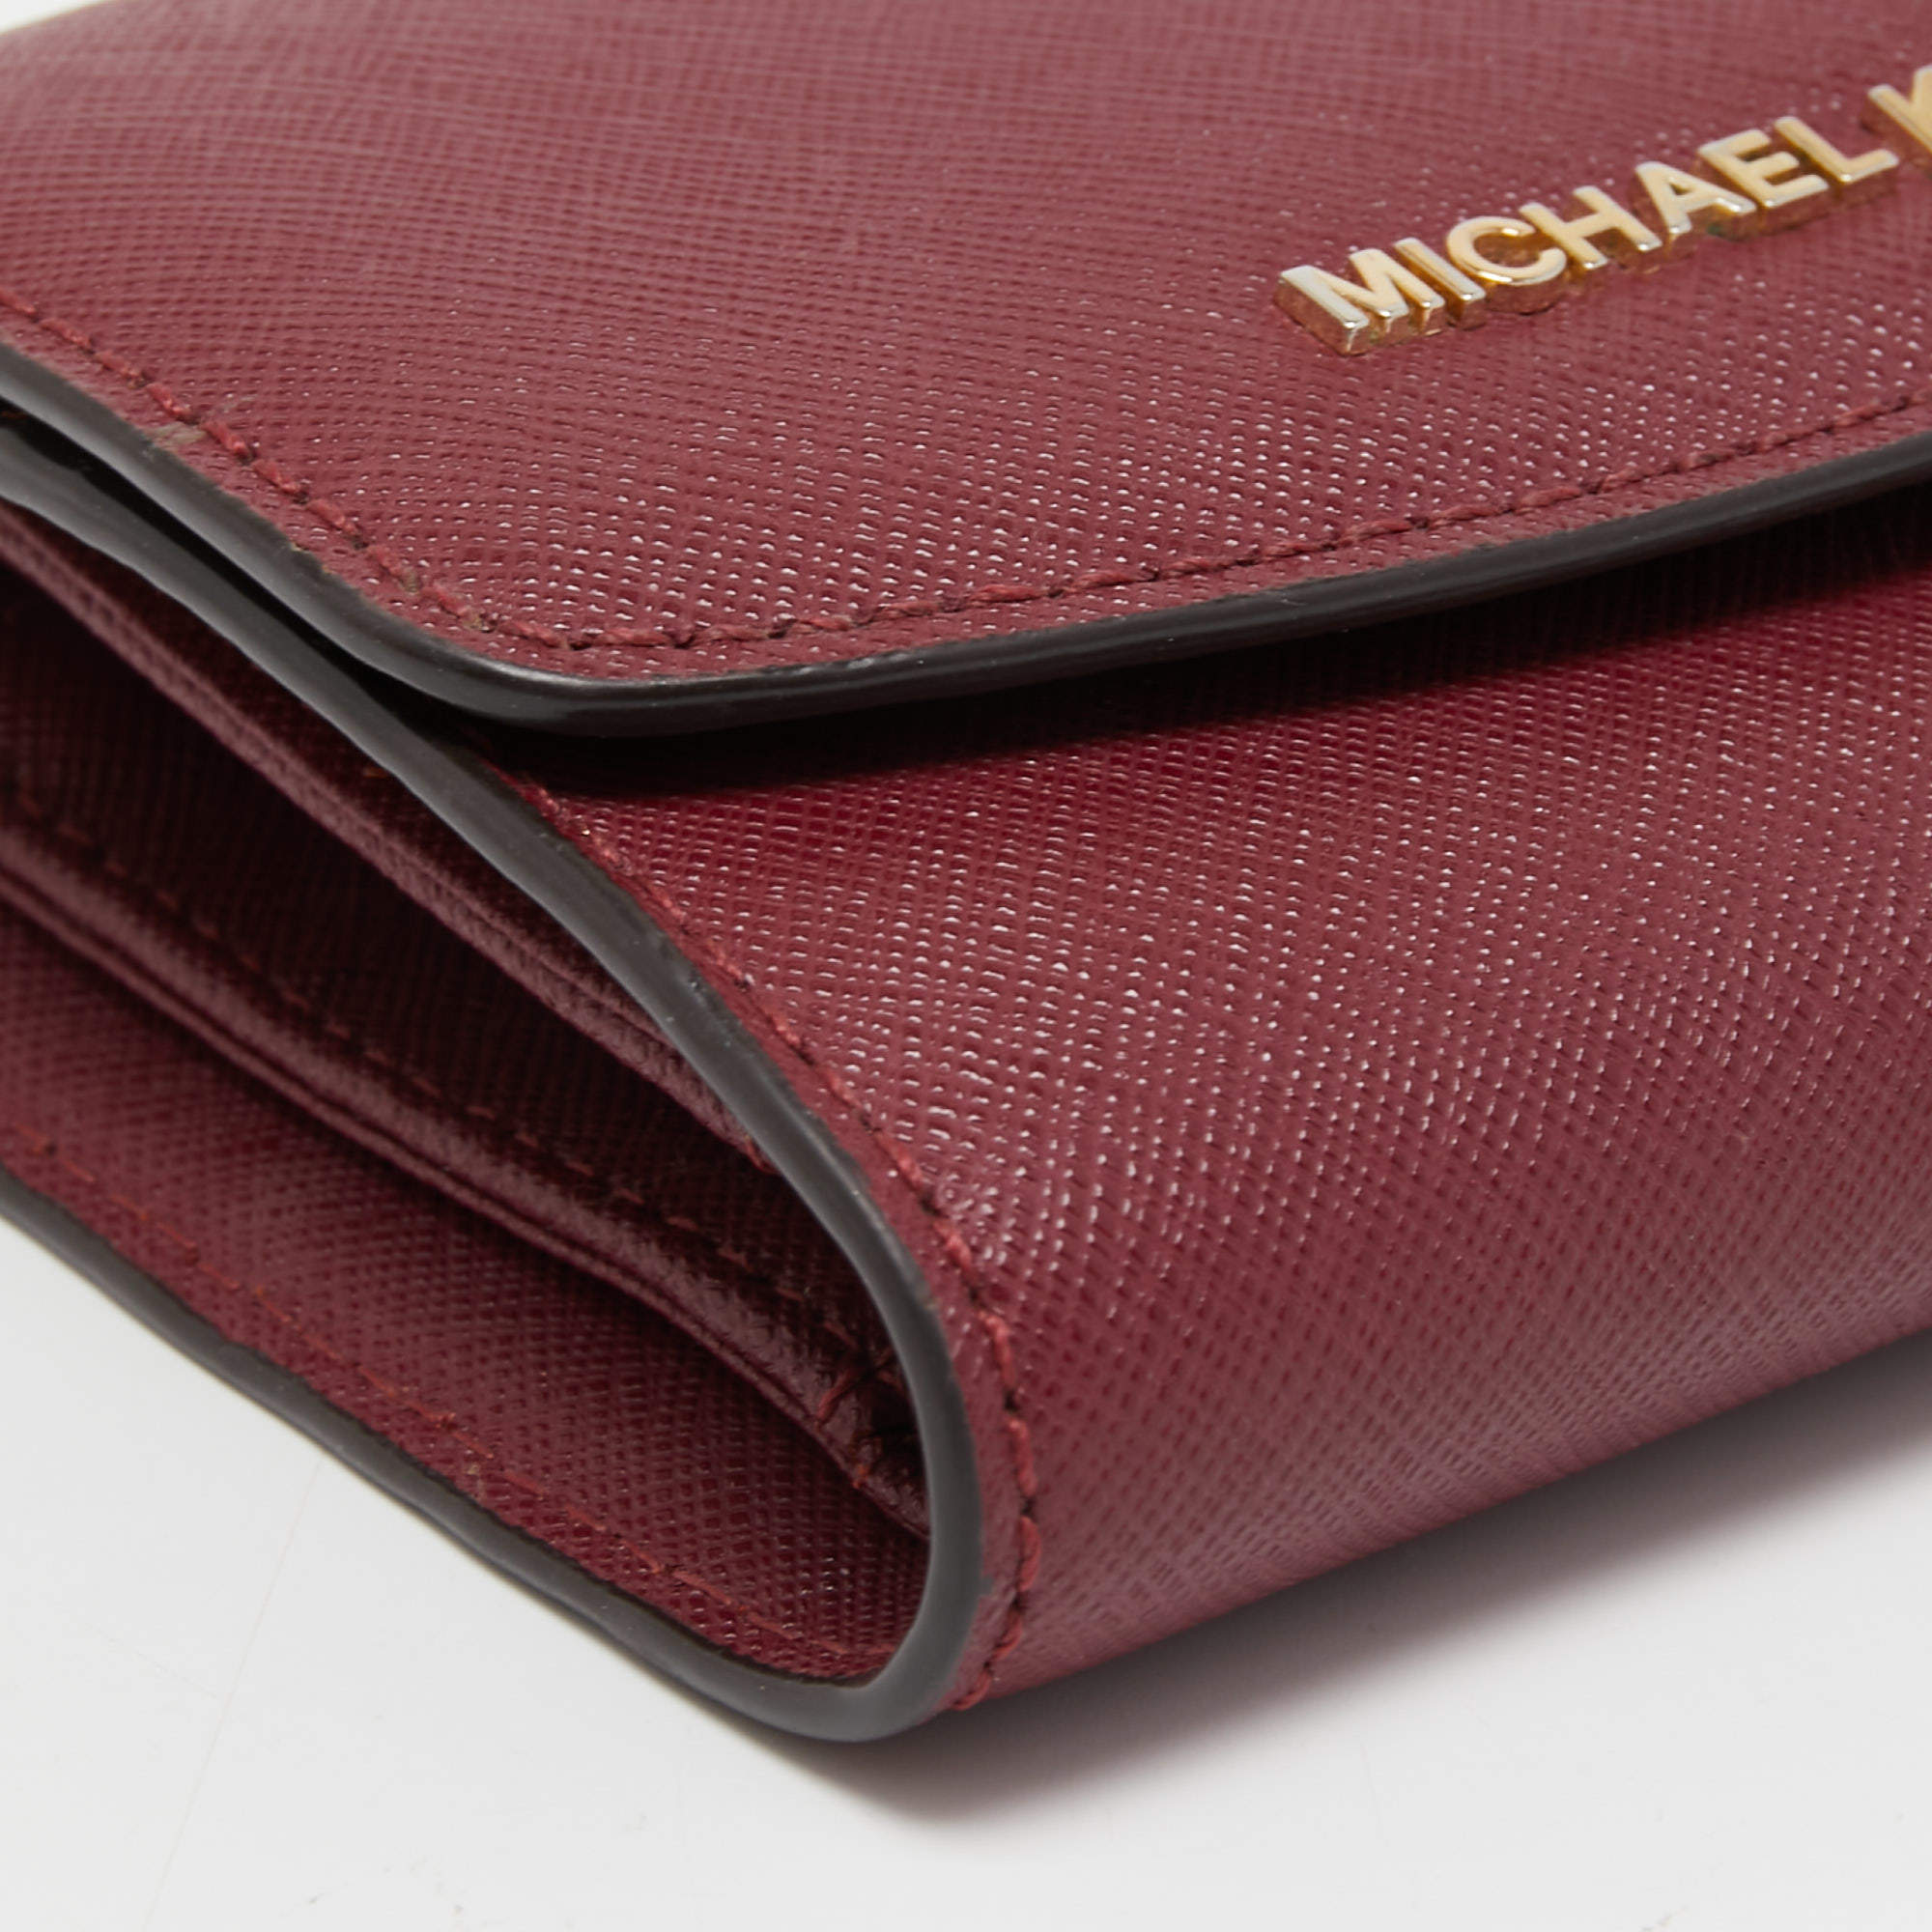 Jet set leather wallet Michael Kors Burgundy in Leather - 32285387